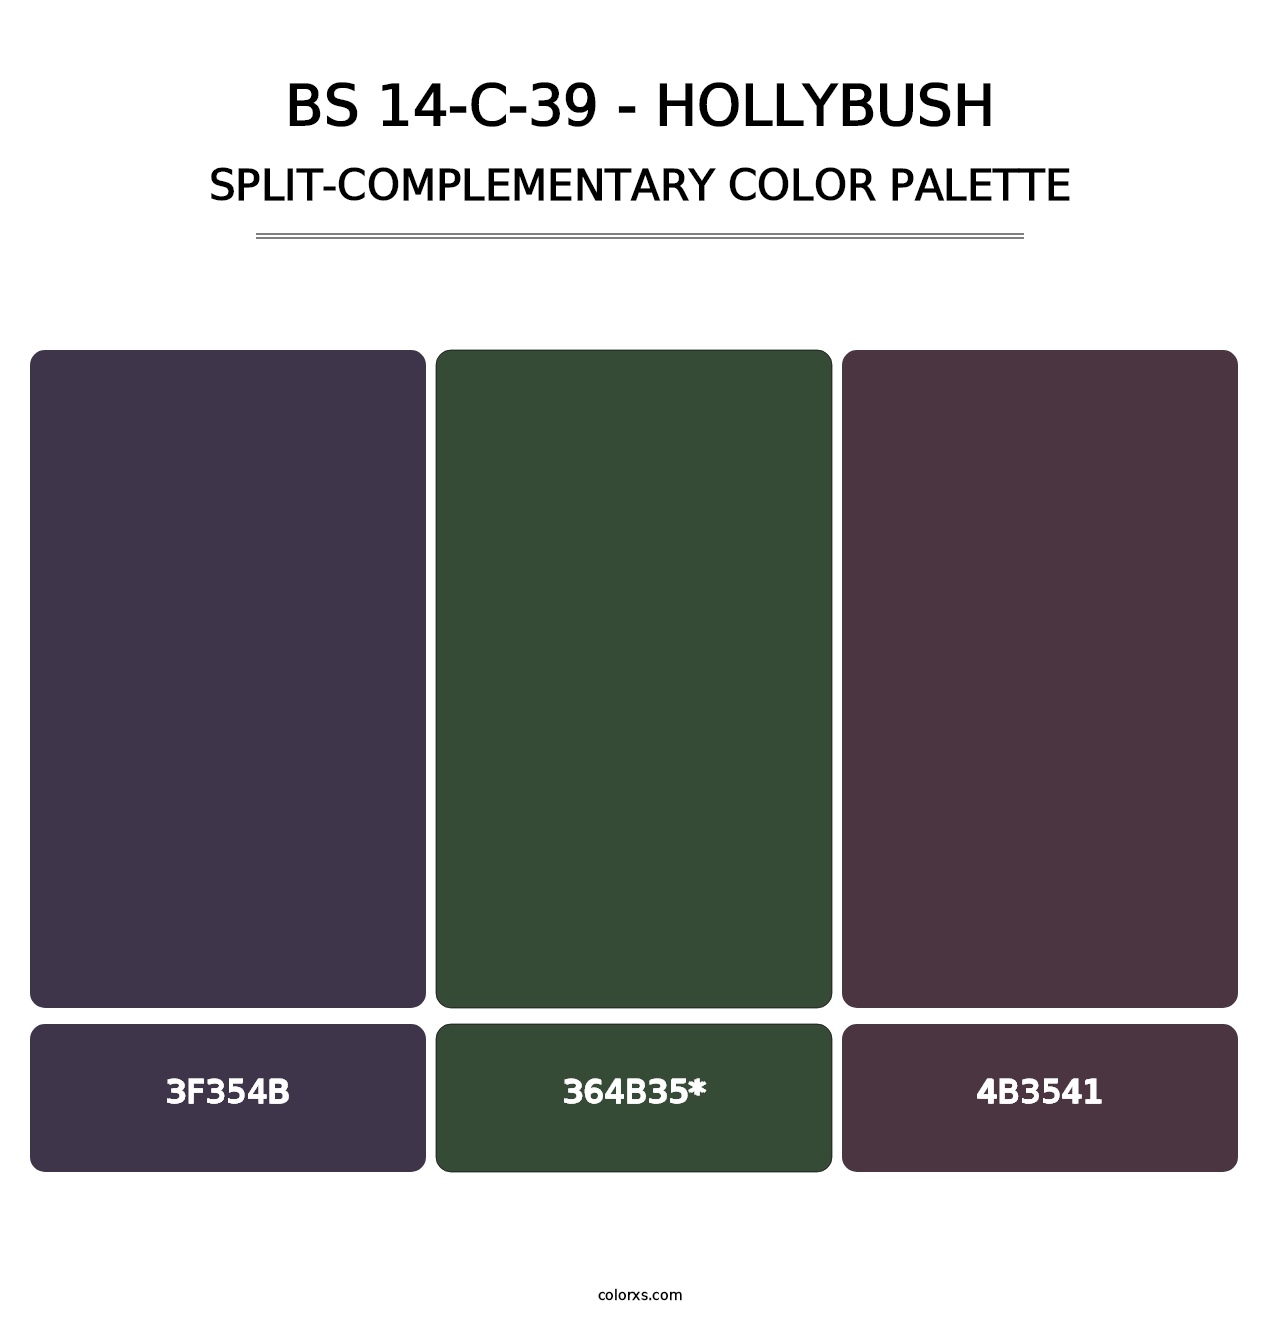 BS 14-C-39 - Hollybush - Split-Complementary Color Palette